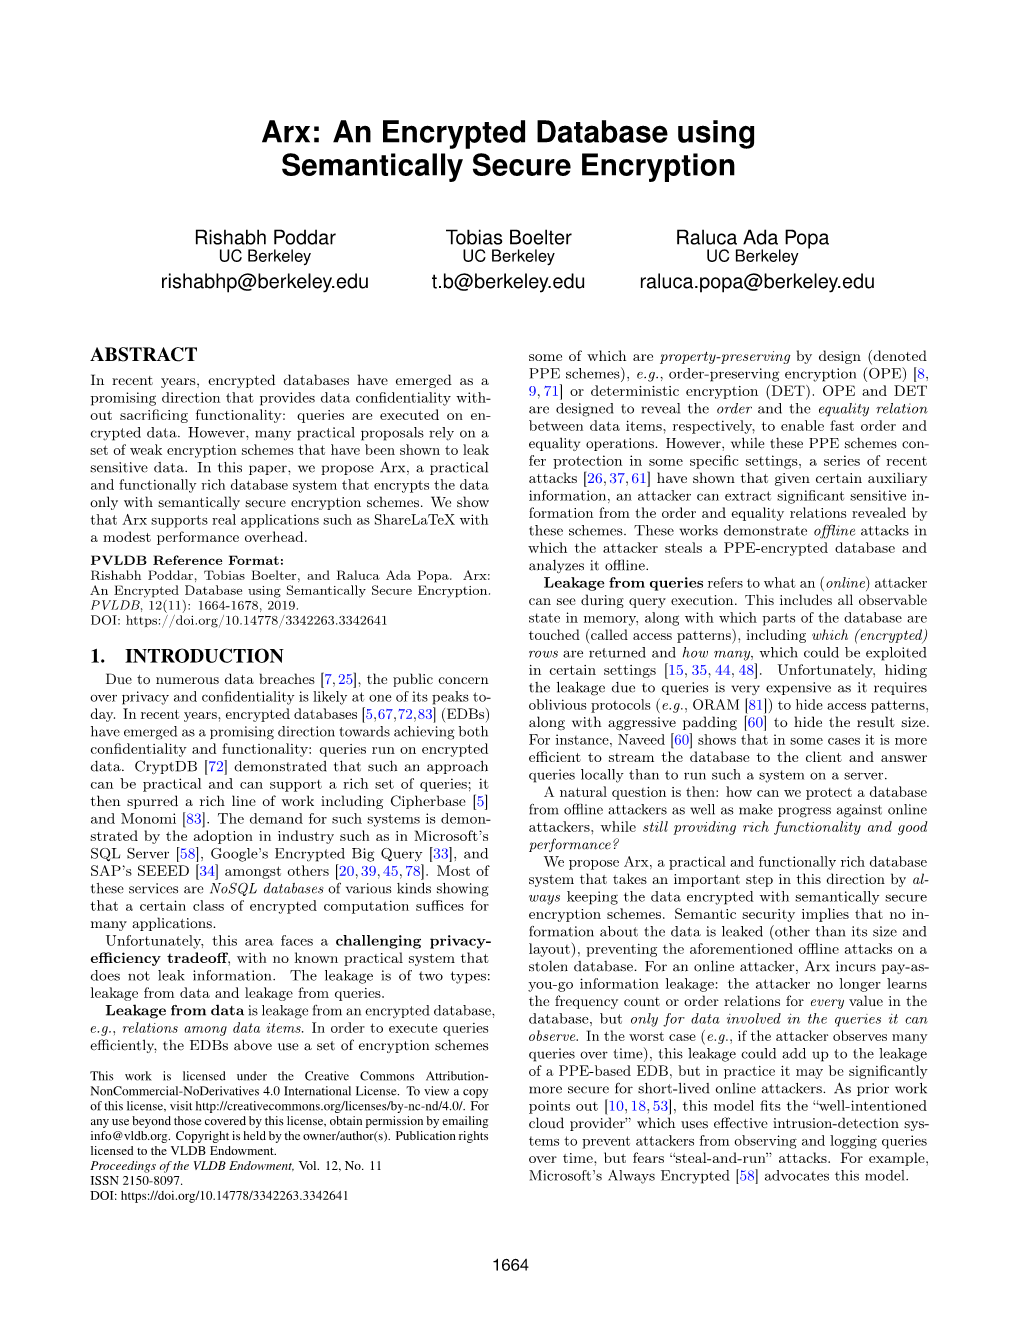 Arx: an Encrypted Database Using Semantically Secure Encryption